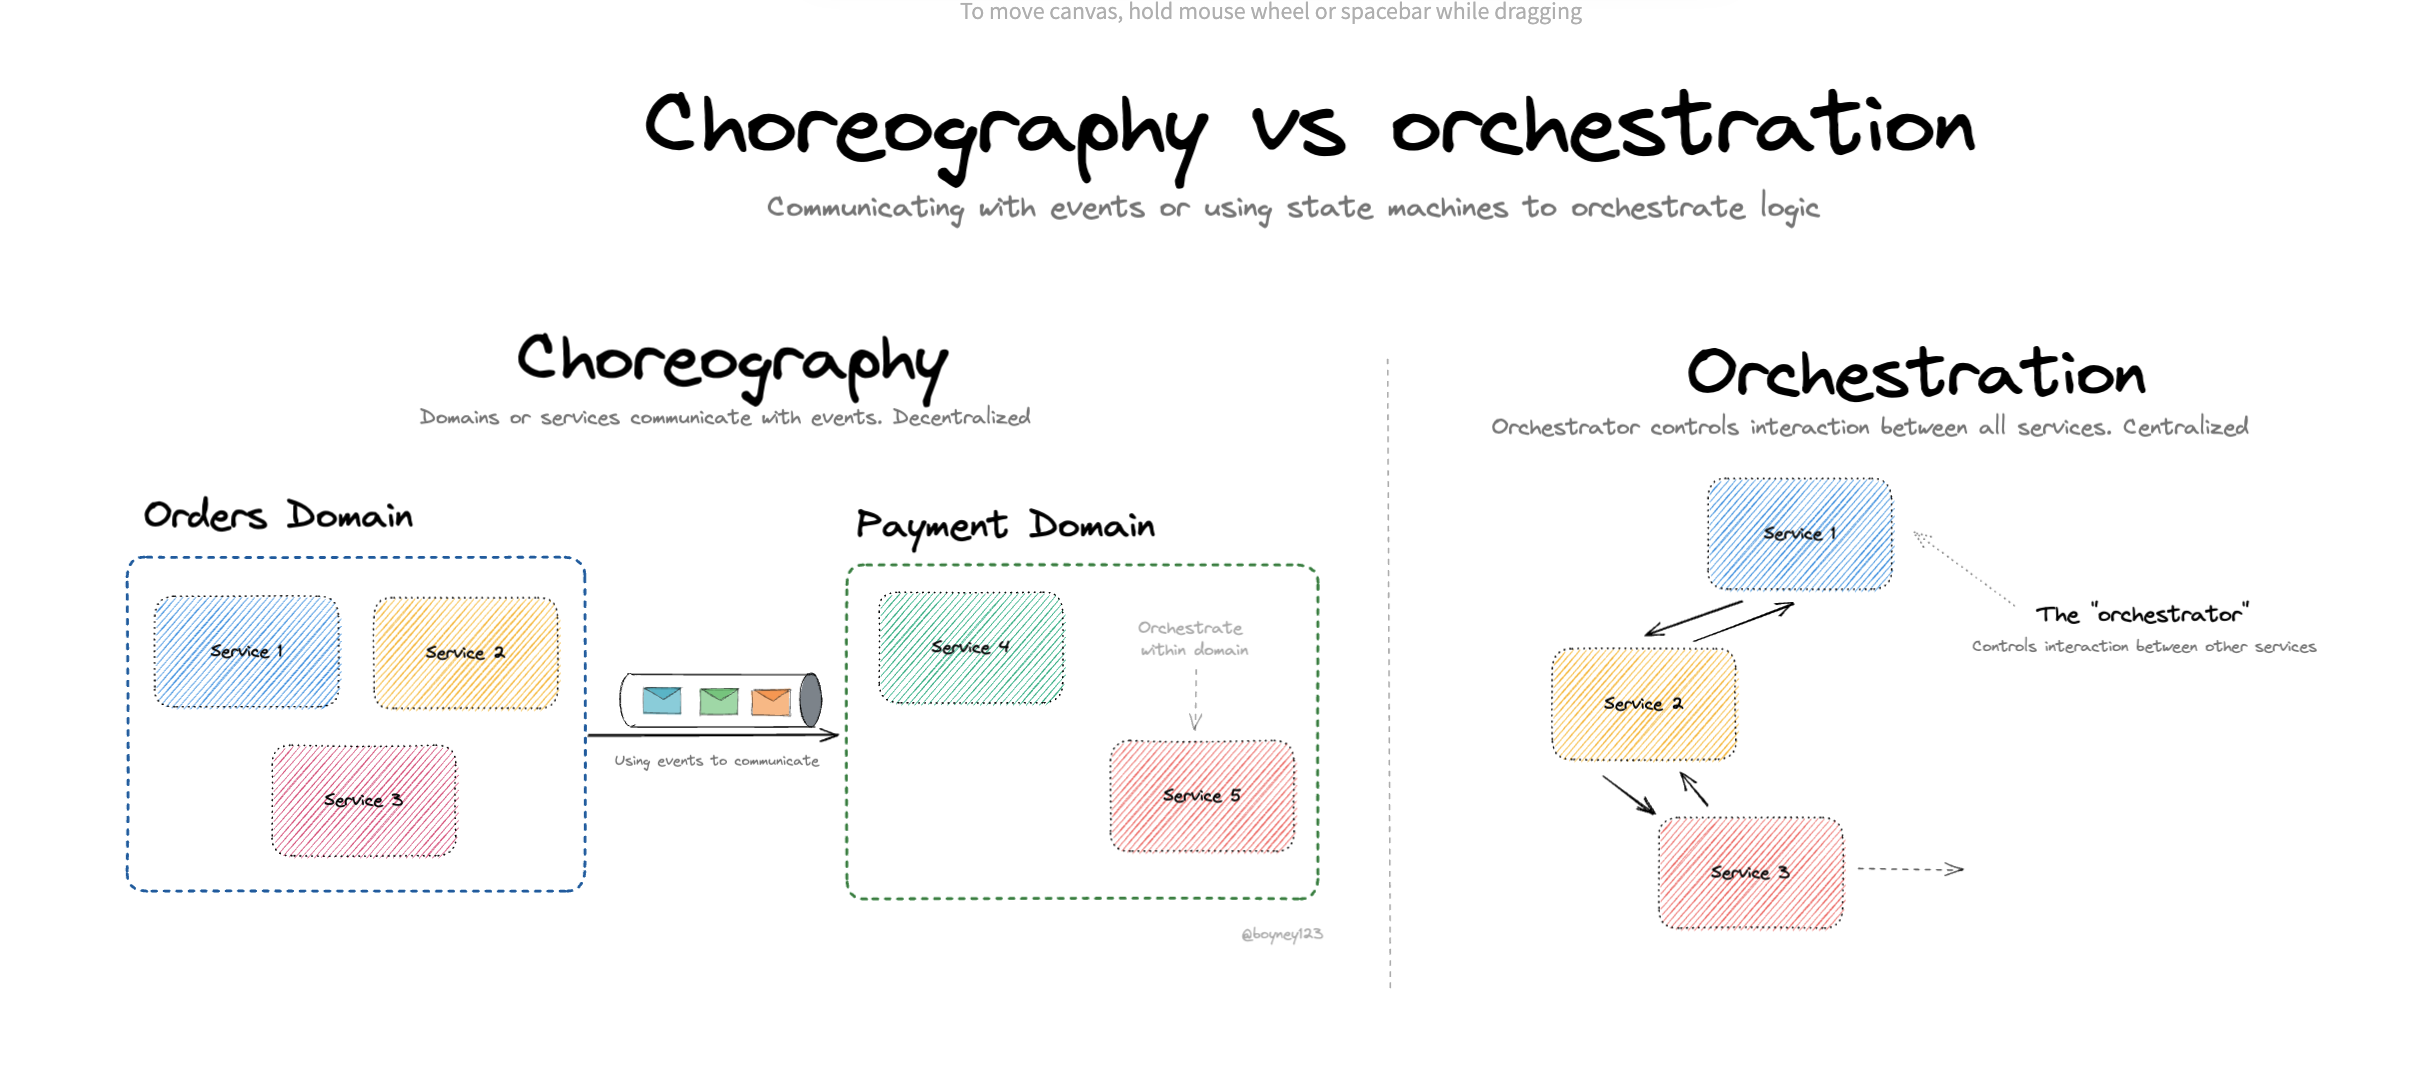 Choreography vs orchestration